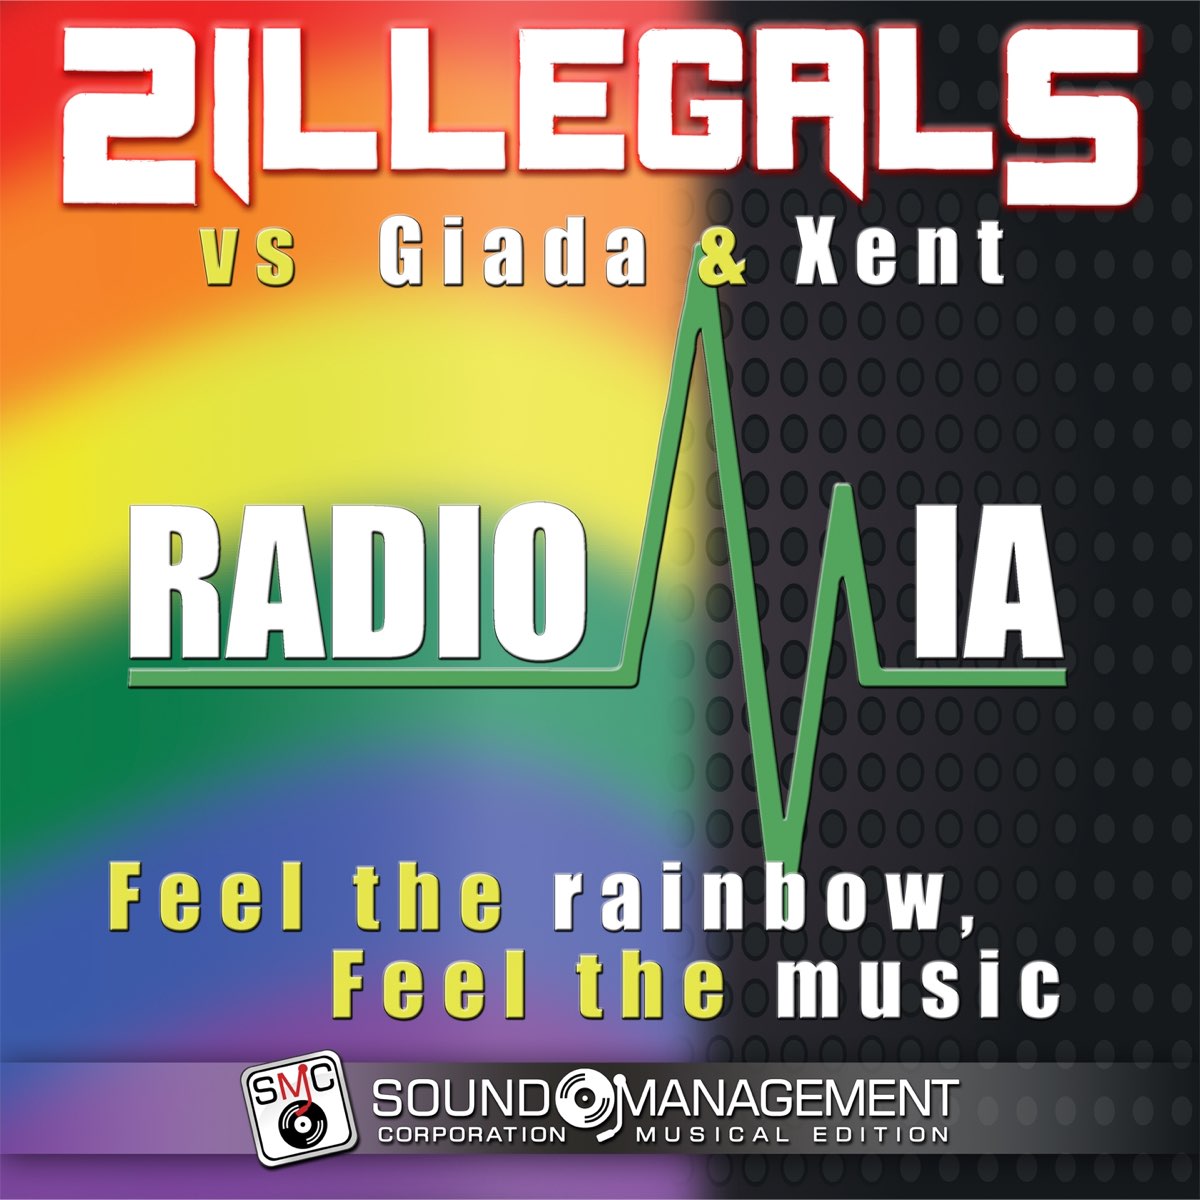 Feel the Rainbow, Feel the Music - Single - Album by 2IllegalS, Giada &  Xent - Apple Music